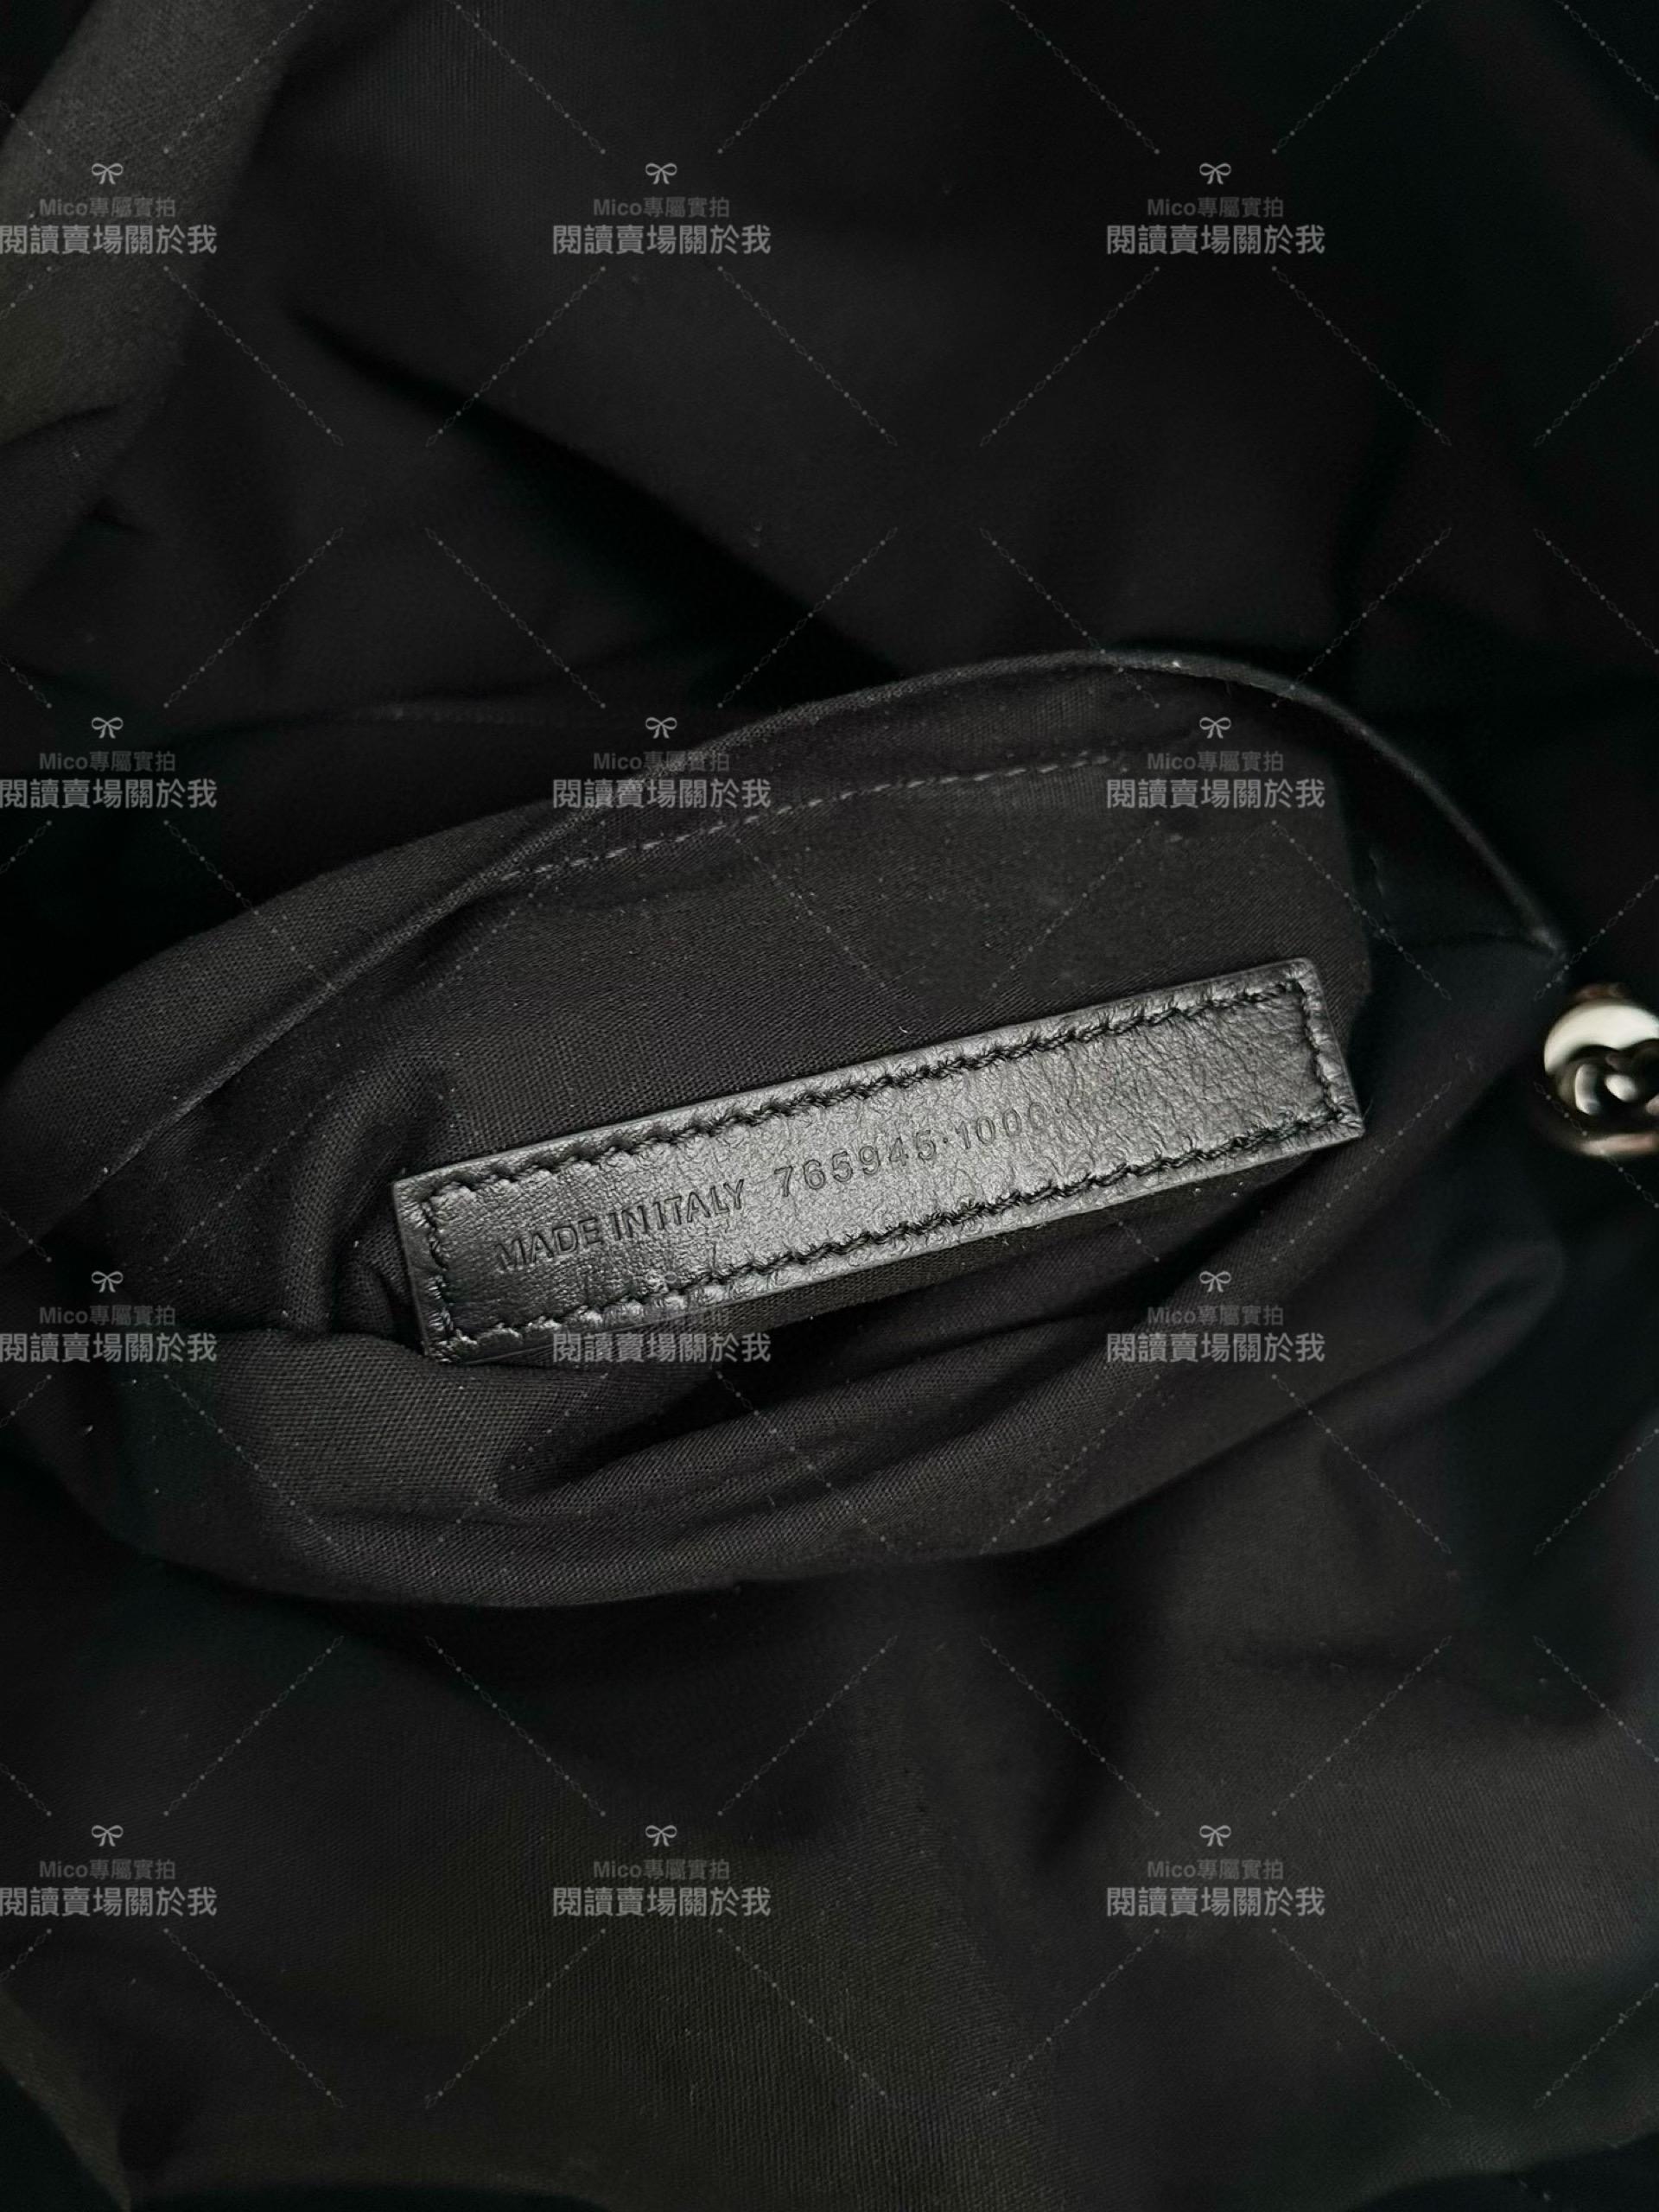 Balenciaga 巴黎世家 monaco蓬蓬包/枕頭包 黑銀中號 32.5cm